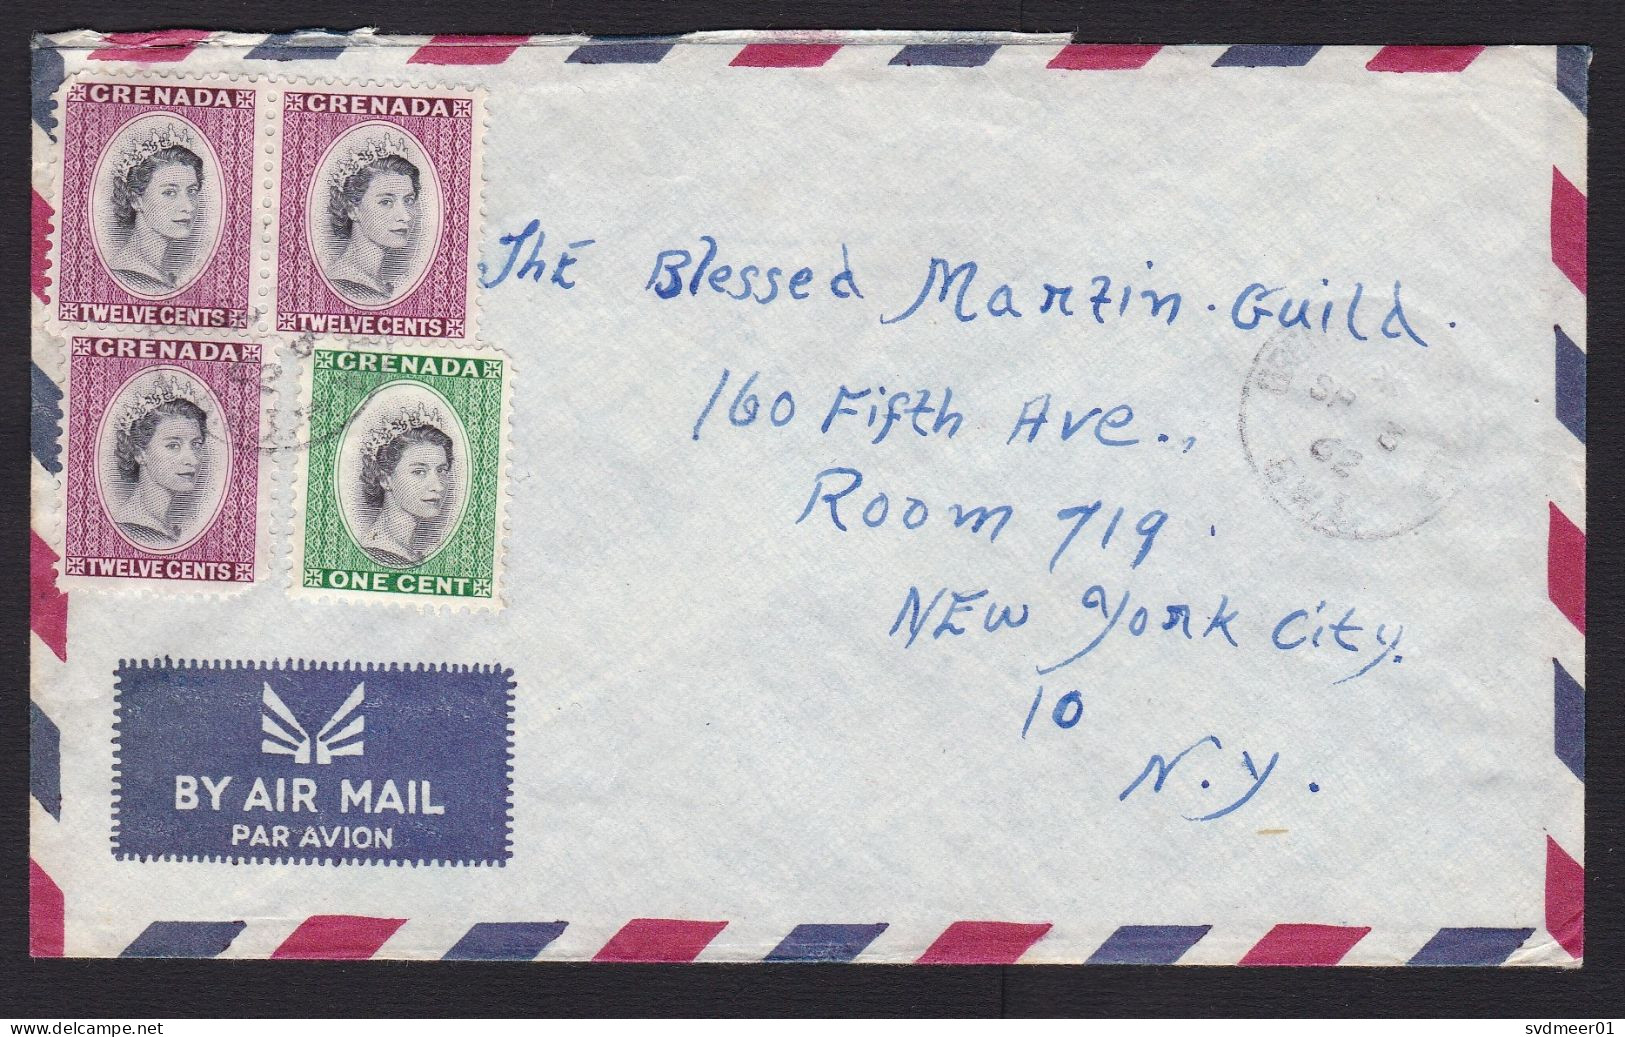 Grenada: Airmail Cover To USA, 1962, 4 Stamps, Queen Elizabeth (minor Damage) - Grenade (...-1974)